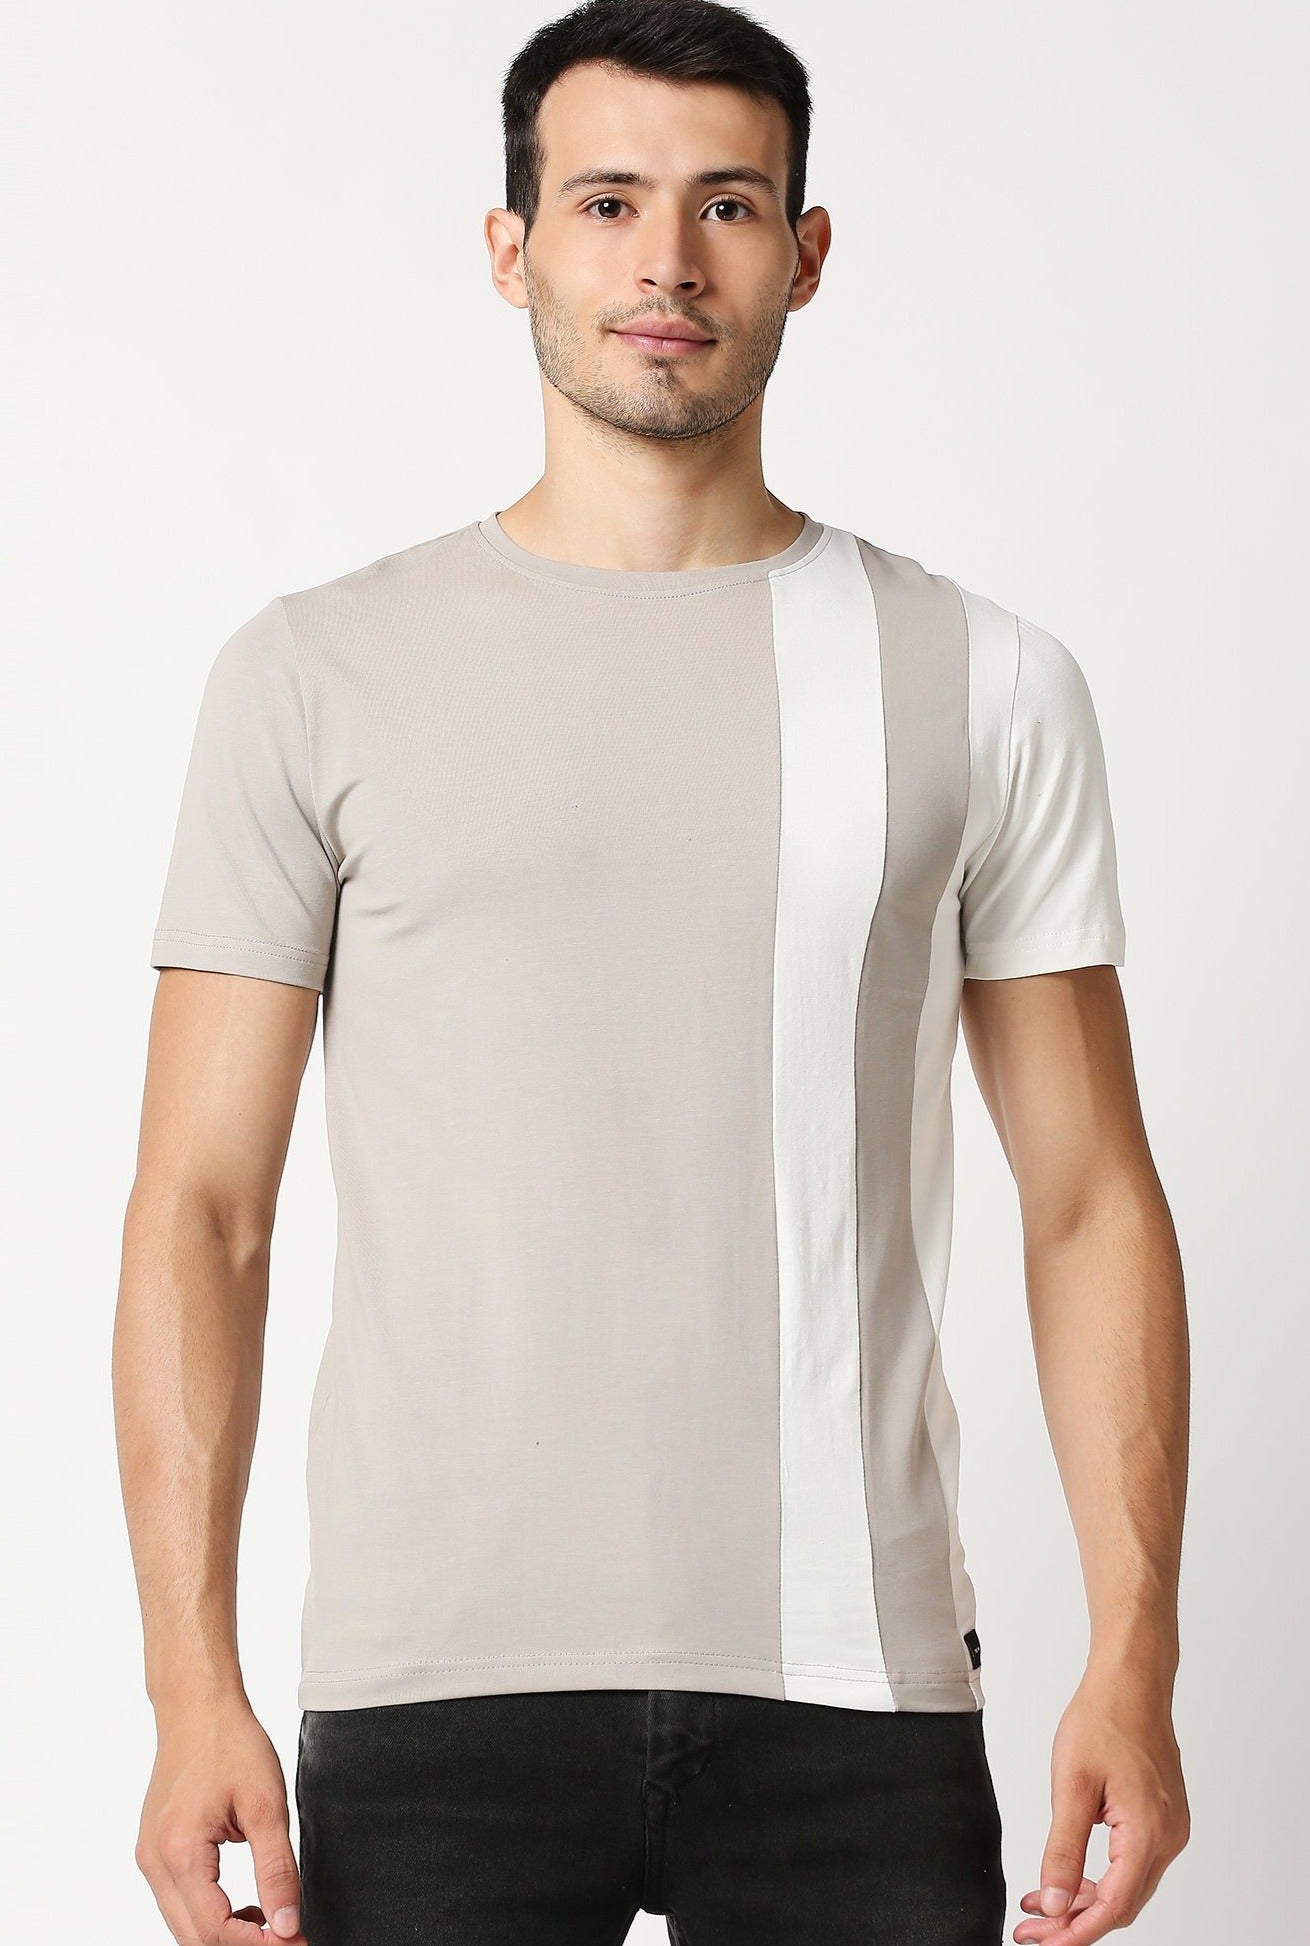 Fostino Salford Grey Round Neck T-Shirt - Fostino - T-Shirts